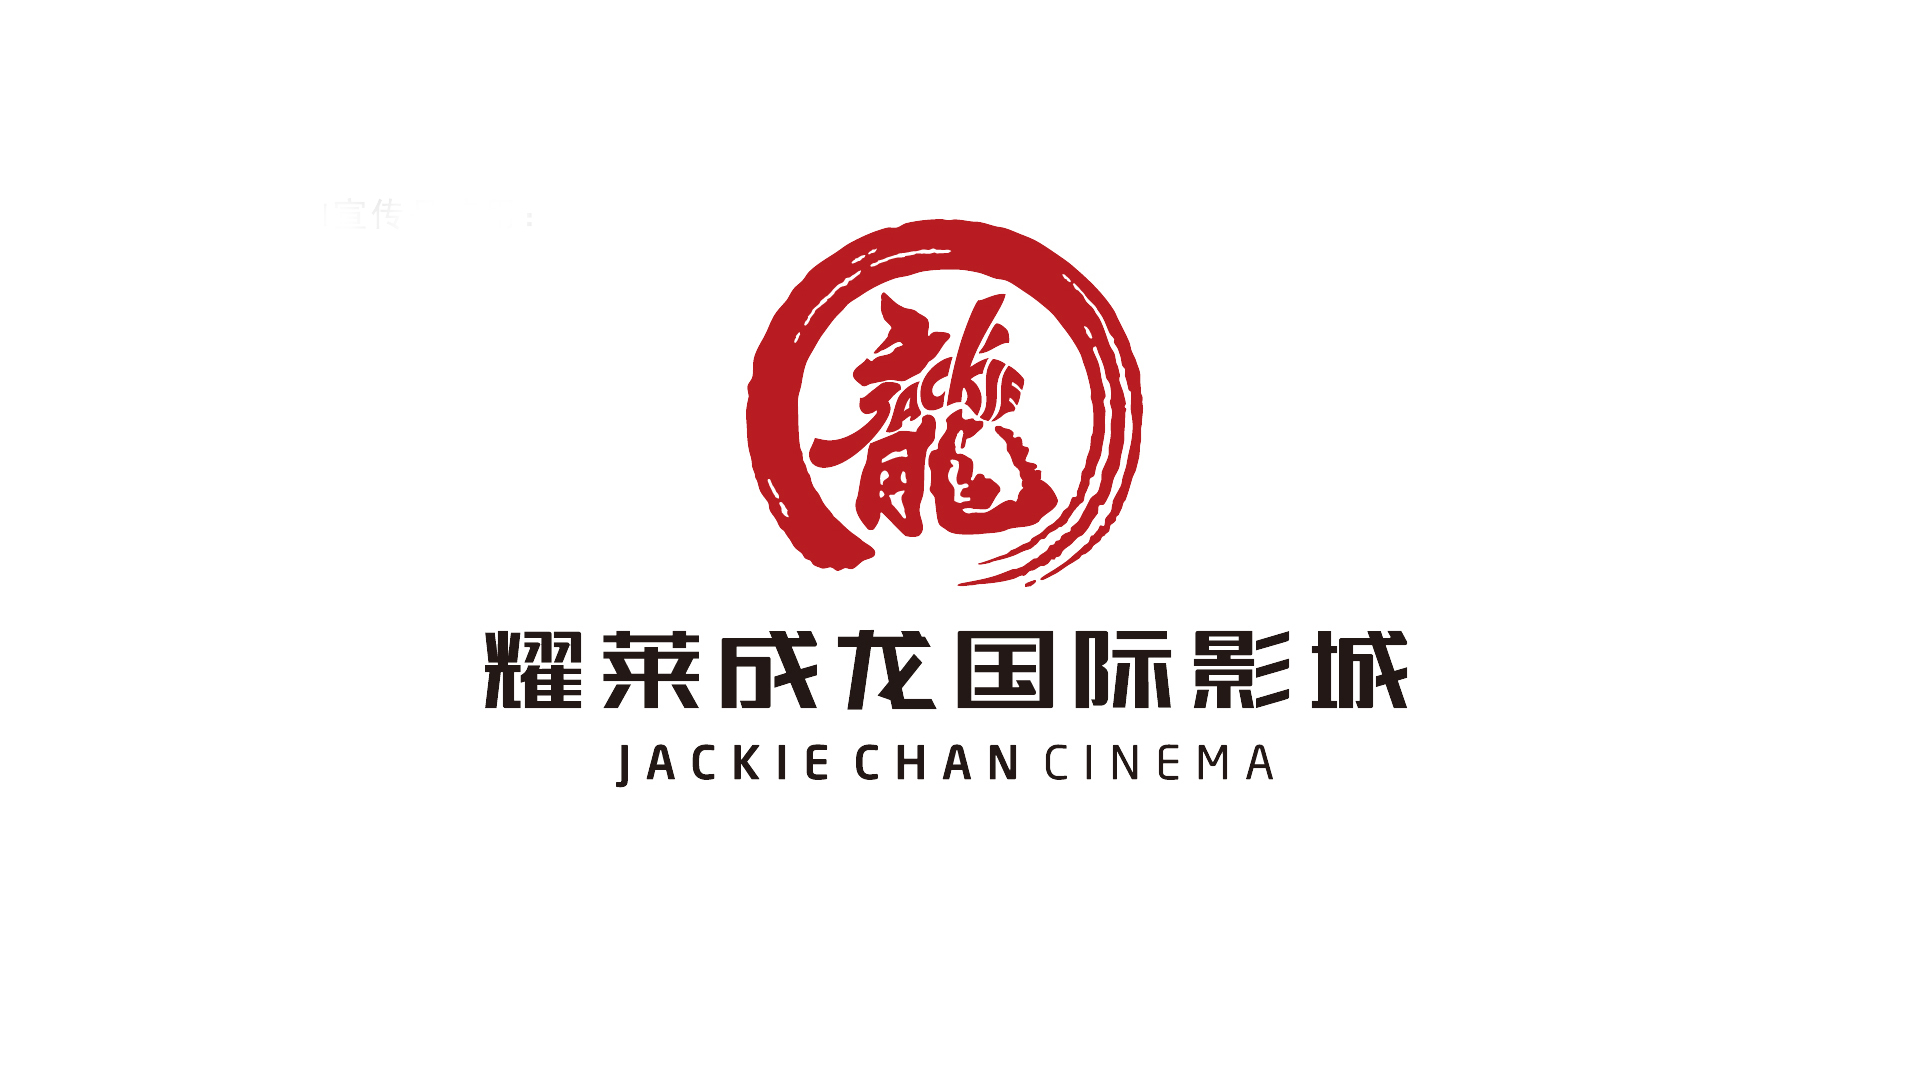 Jackie Chan Cinema logo